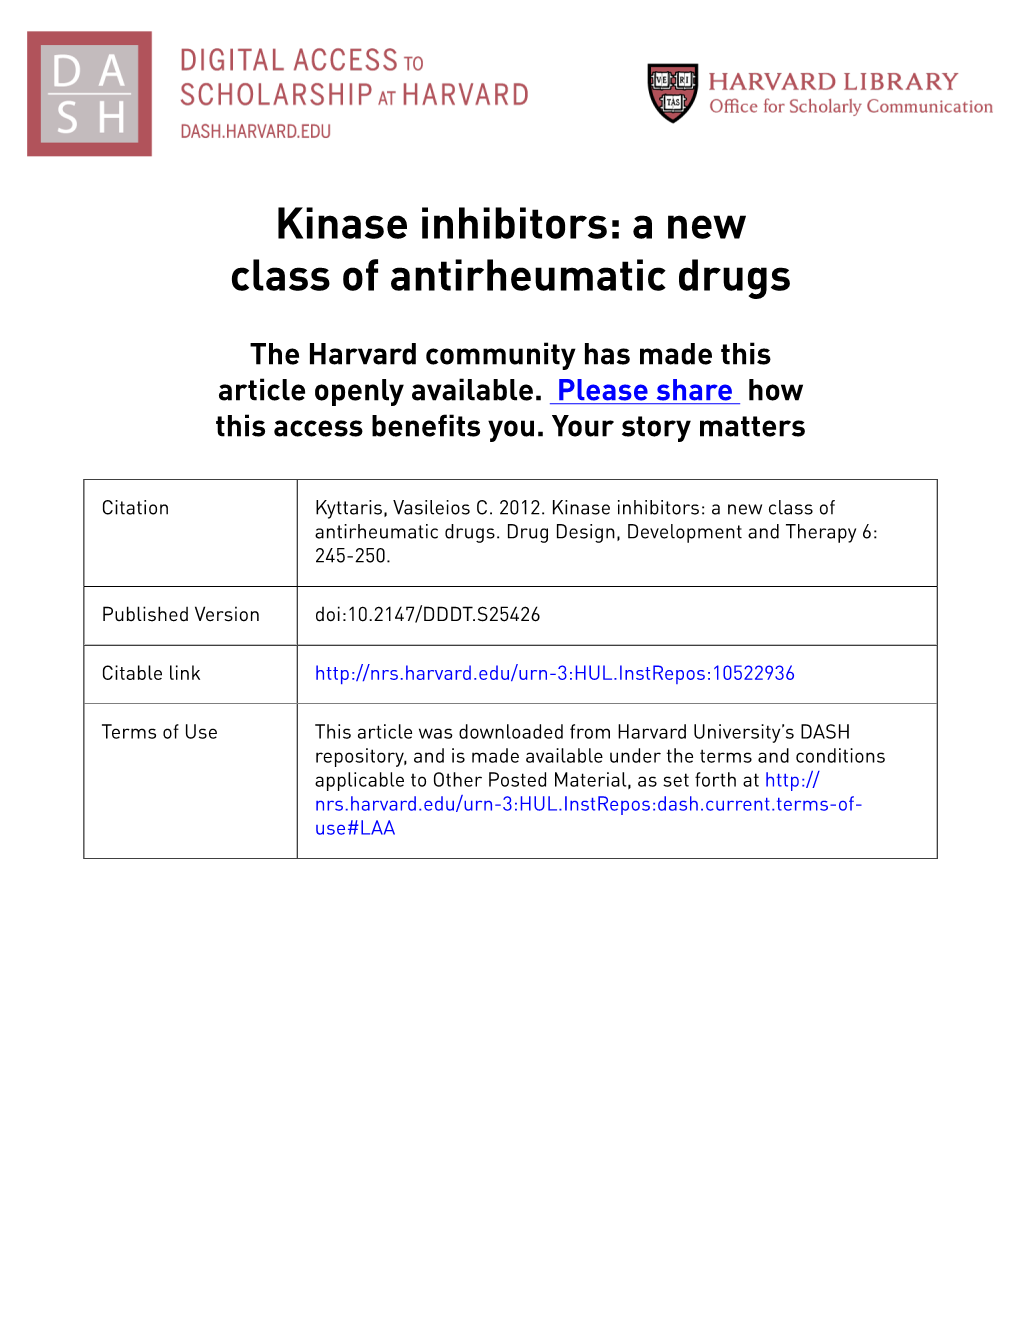 Kinase Inhibitors: a New Class of Antirheumatic Drugs